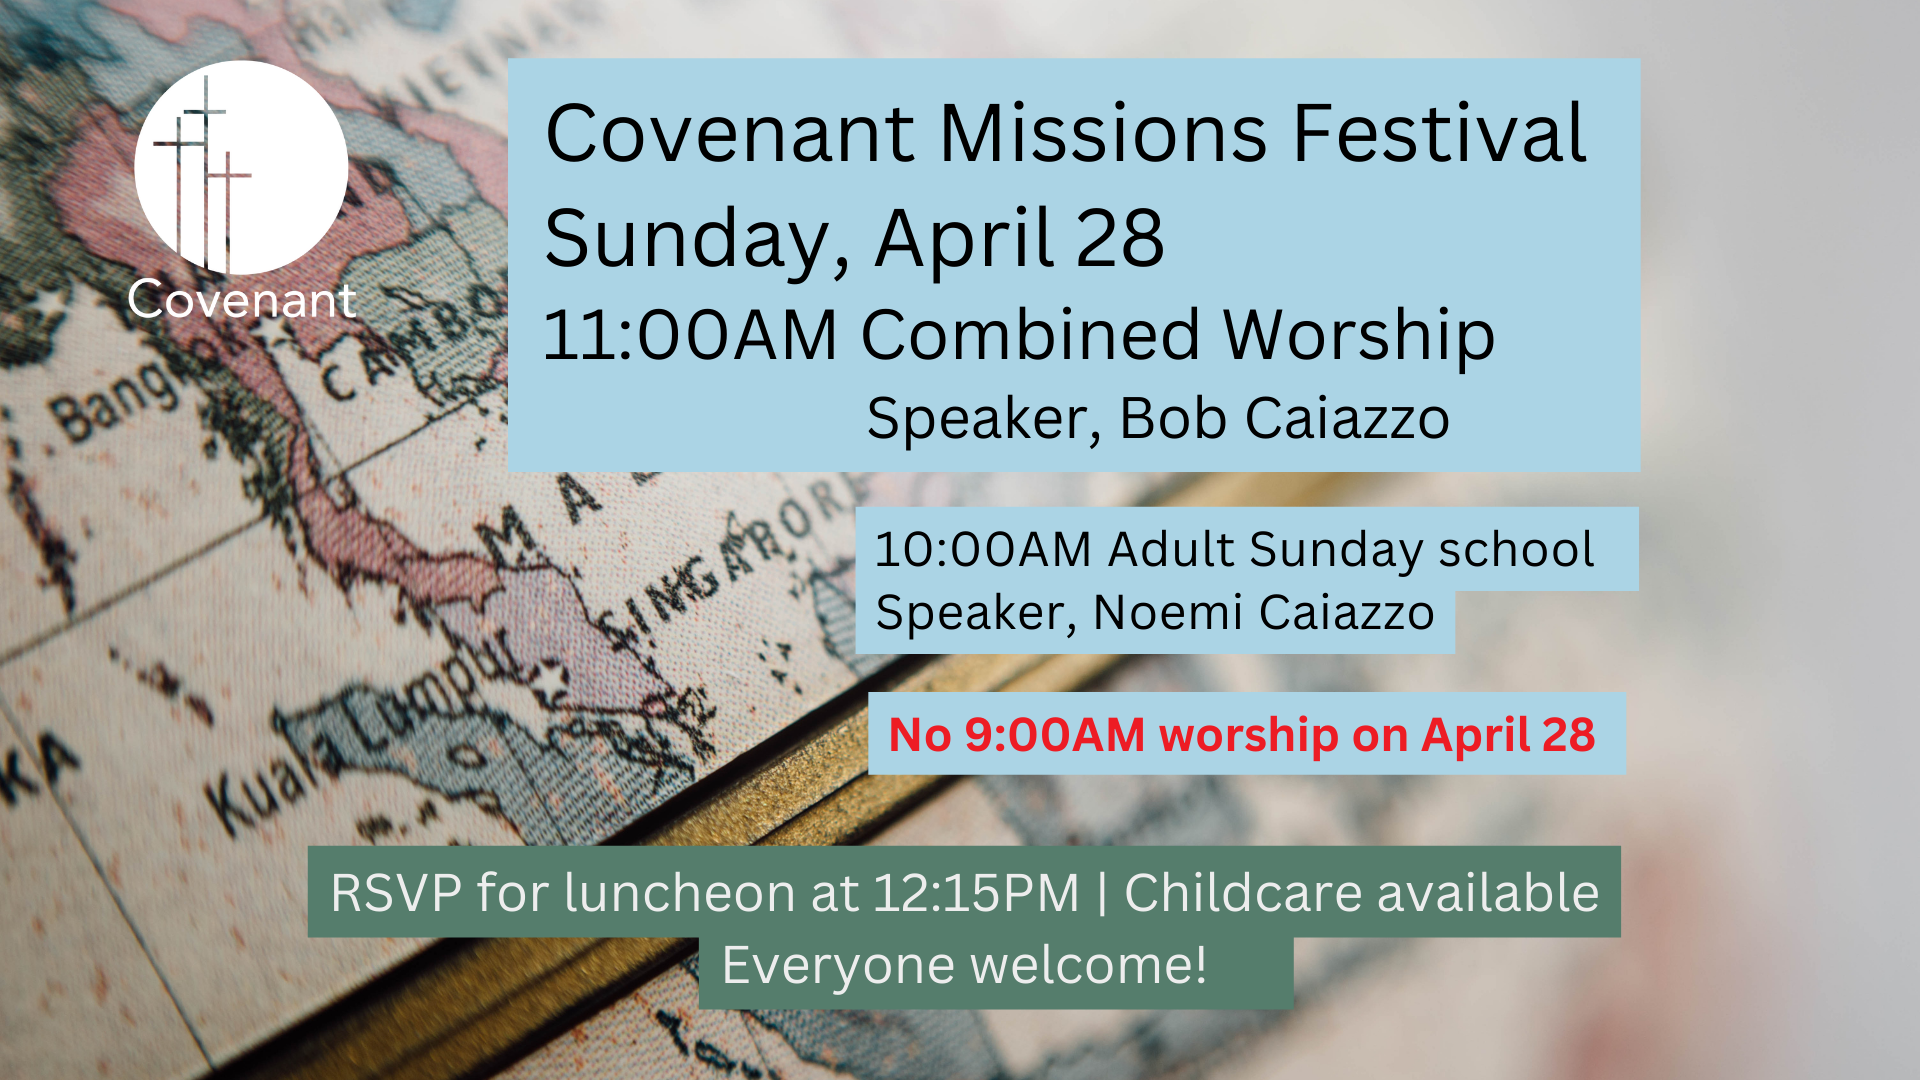 Missions Festival- Covenant Church - Omaha, NE